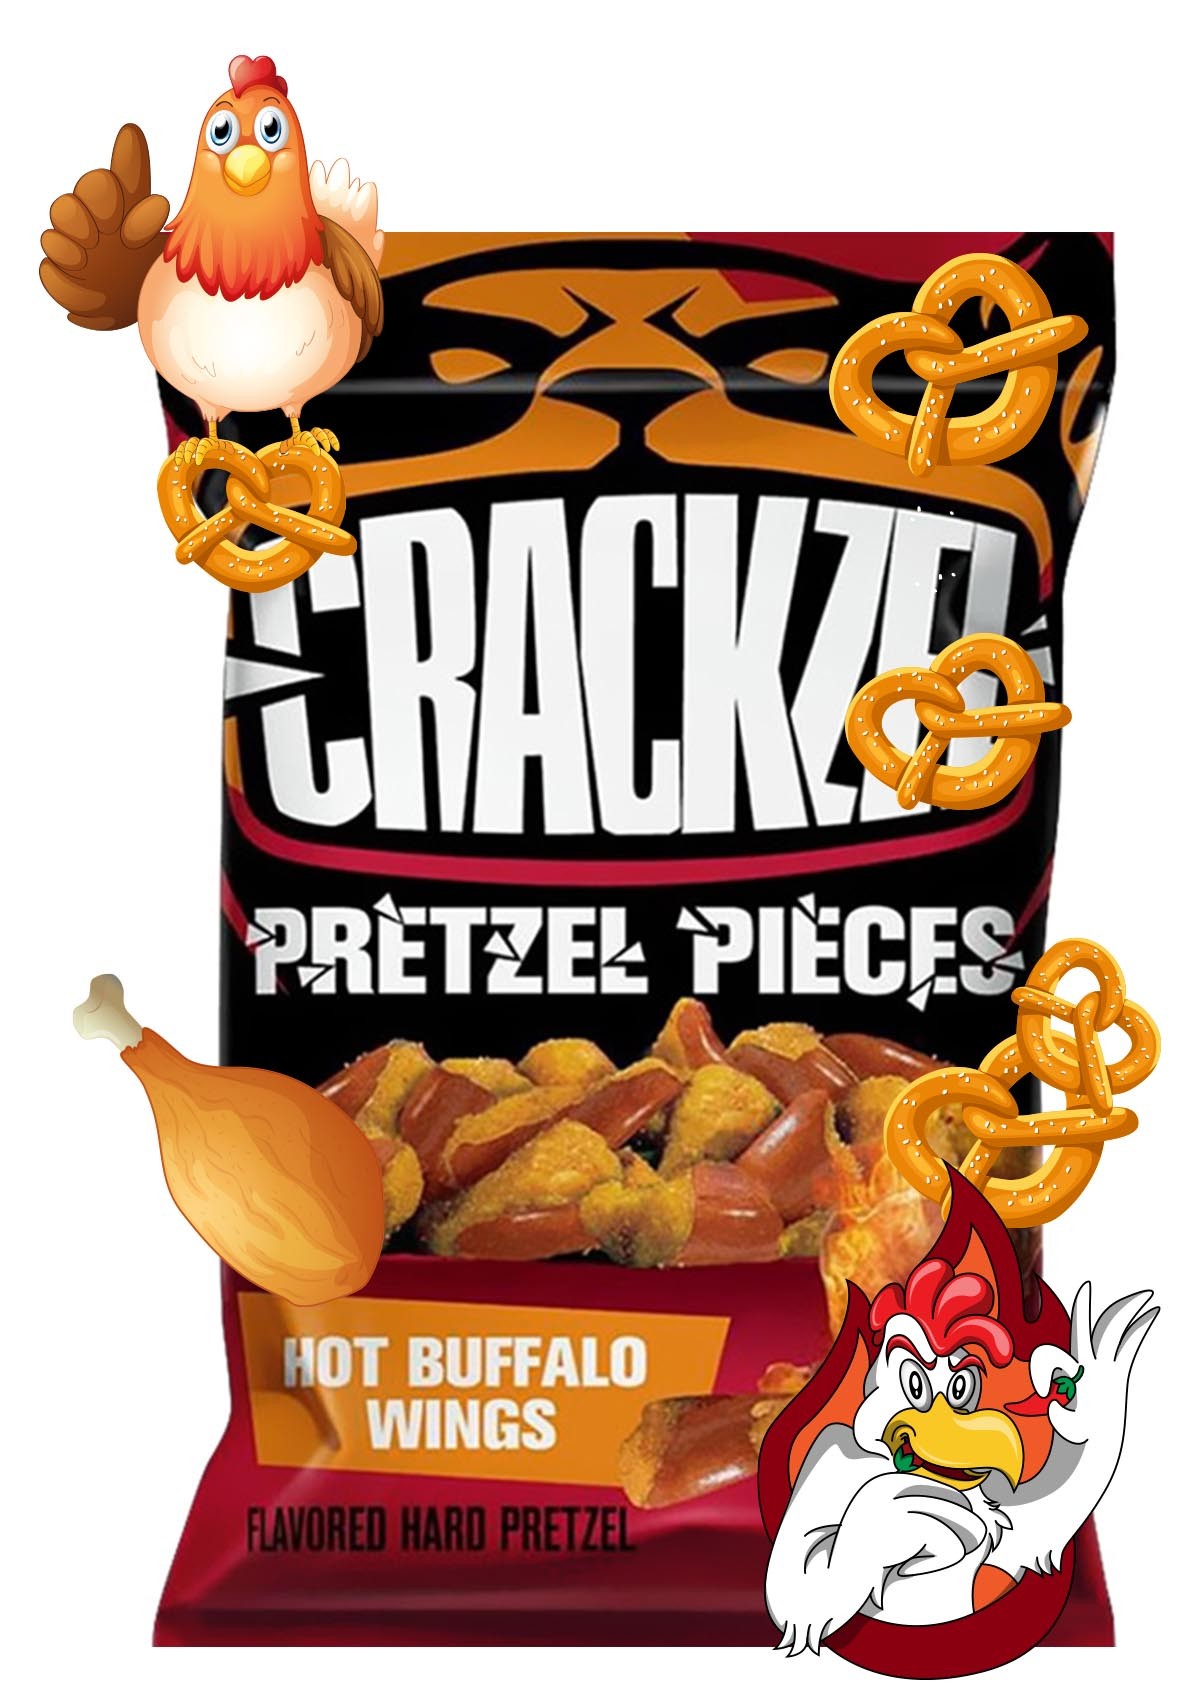 Crackzel Hot Buffalo Wings